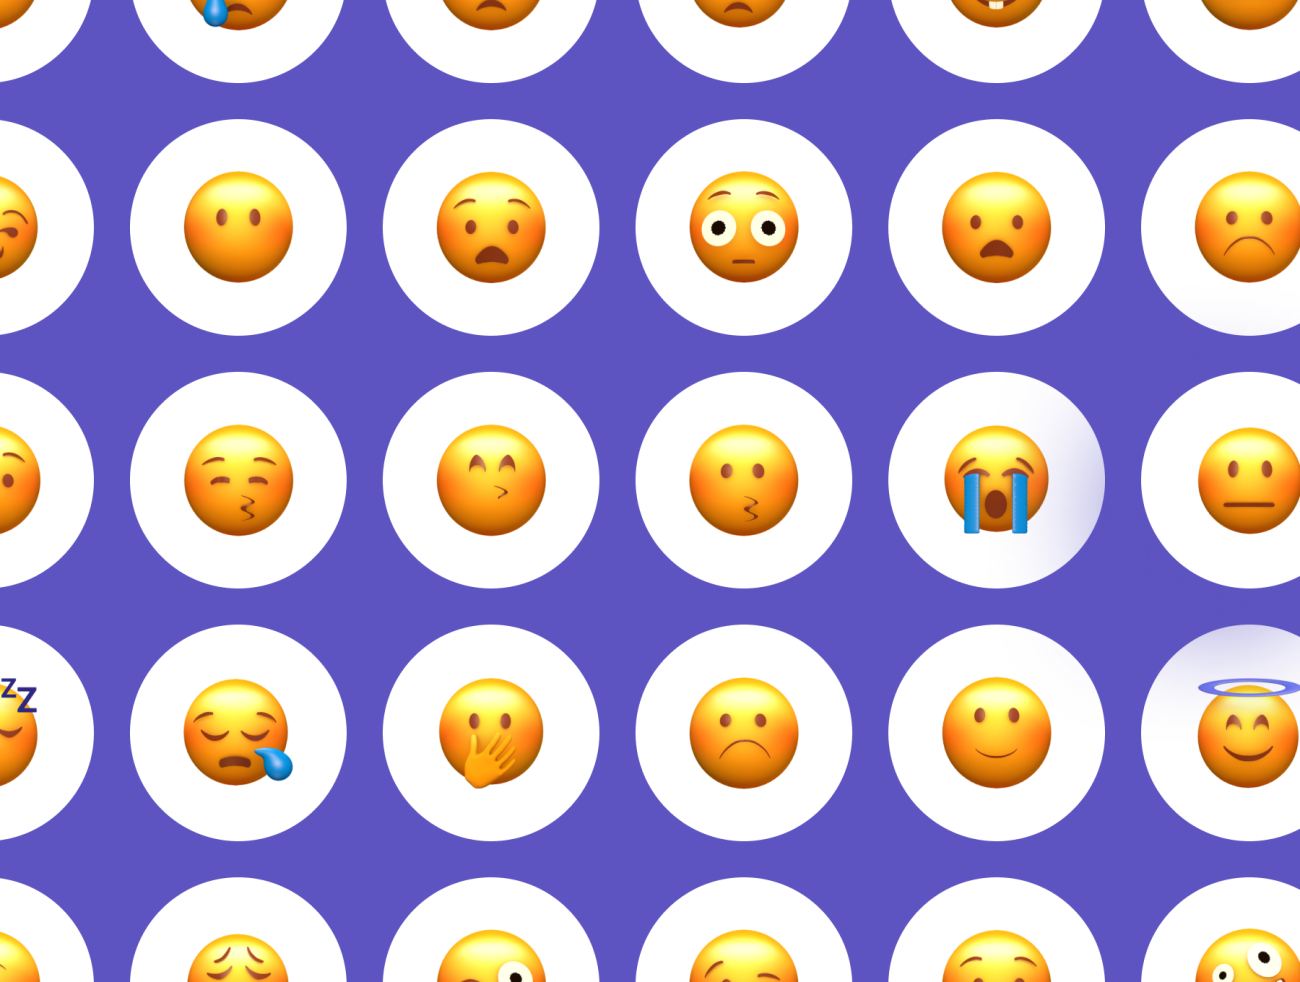 Cartoon Mobile Emoji Phone Pack 70常用3D低面建模卡通表情包合集new-3D/图标-到位啦UI